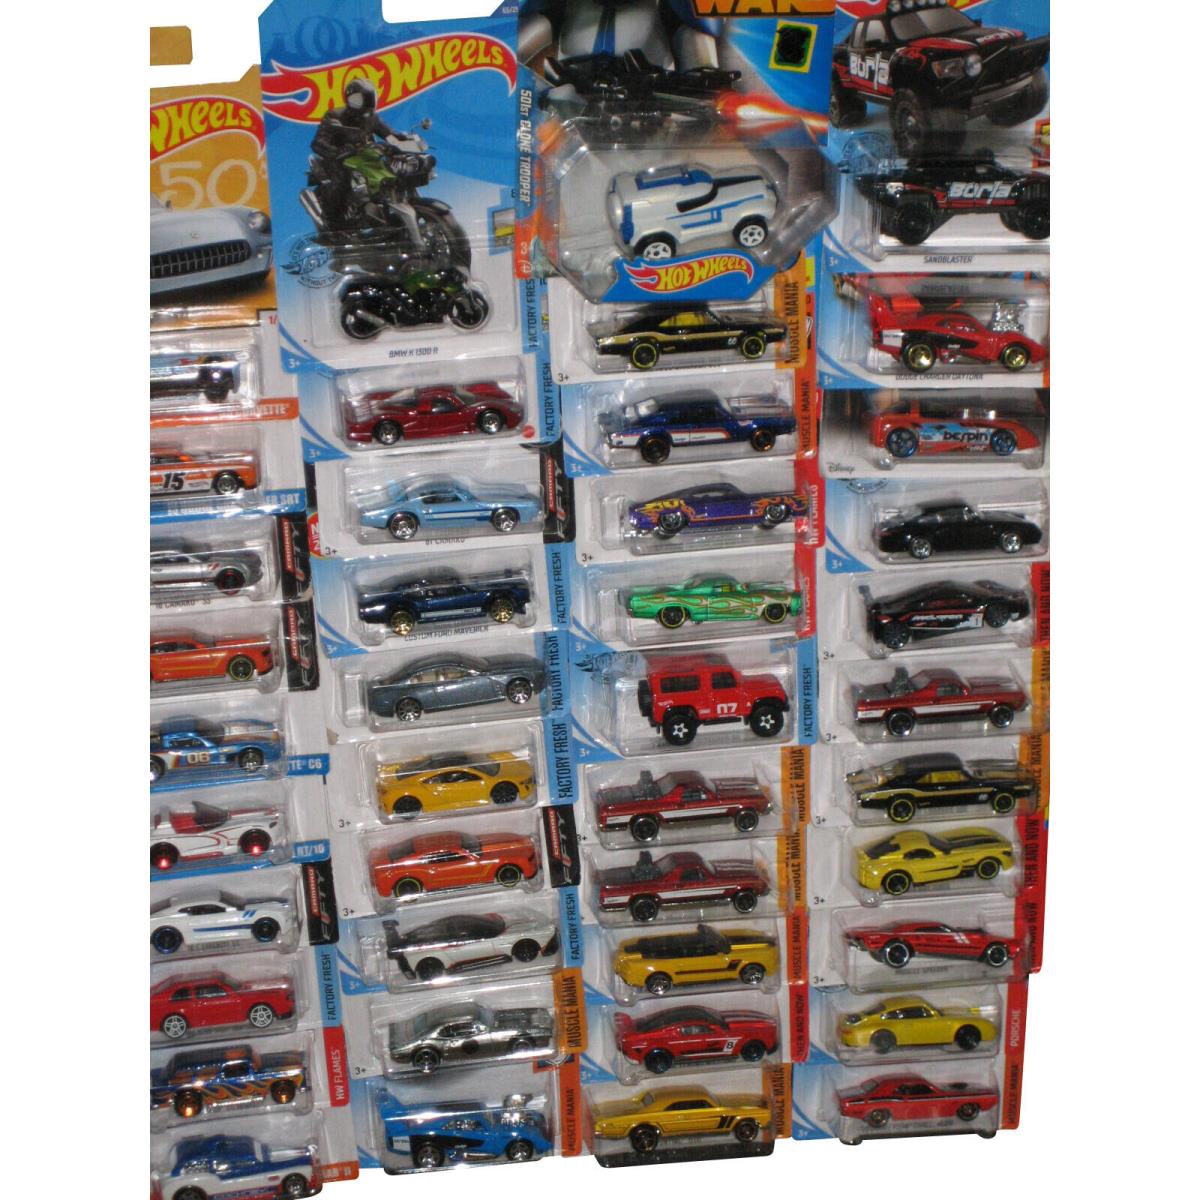 Hot Wheels Matchbox Mattel Mixed Die-cast Toy Cars - Lot of 72 Cars